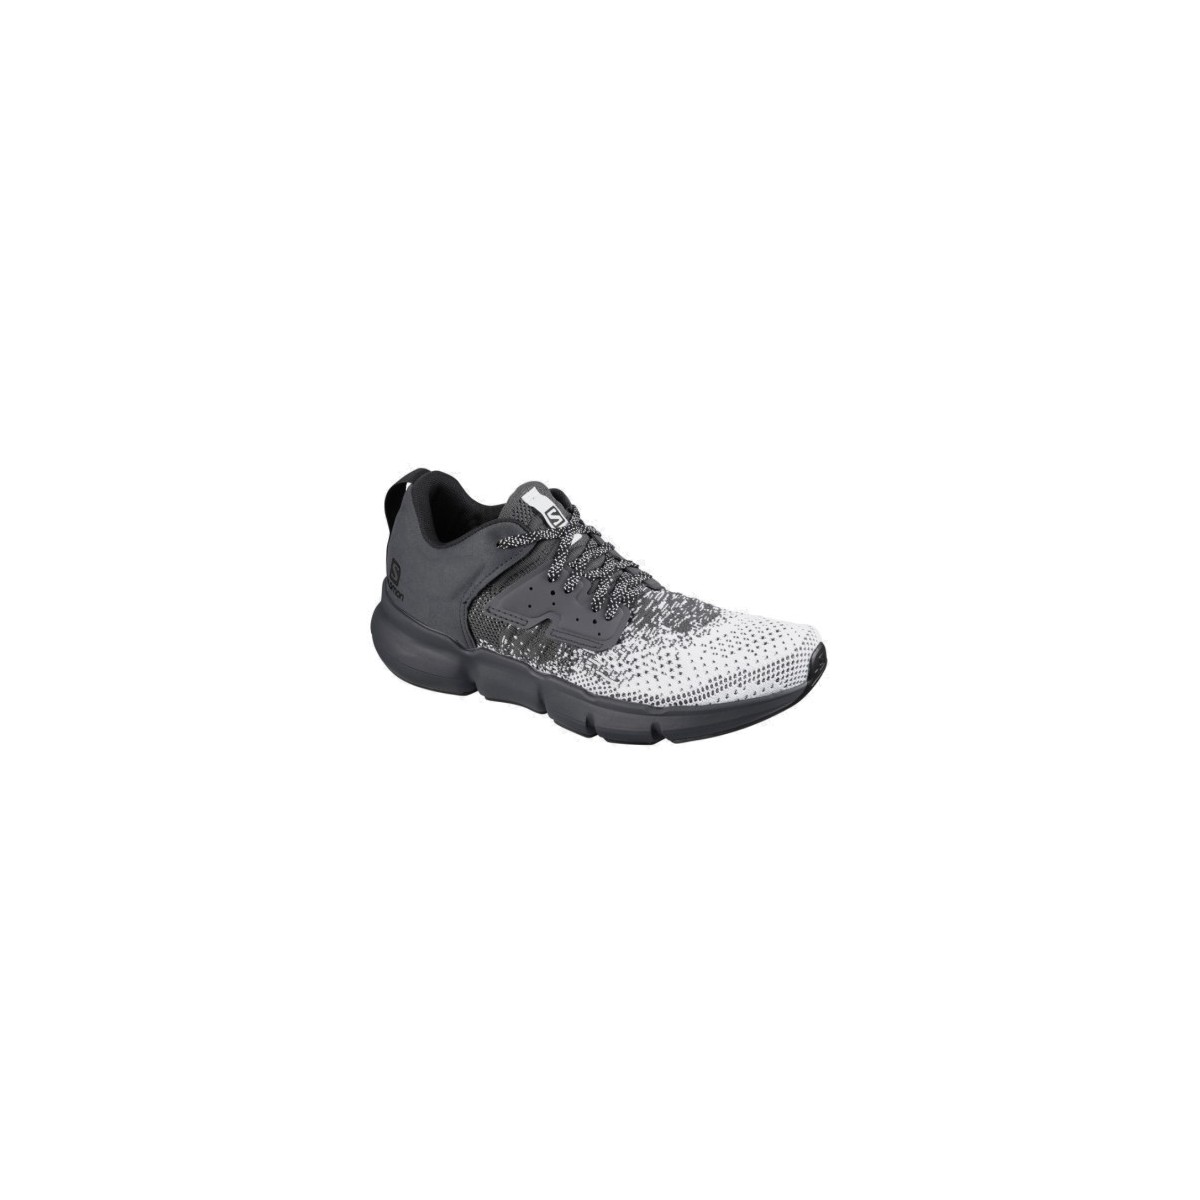 SALOMON running shoes PREDICT SOC W grey/white